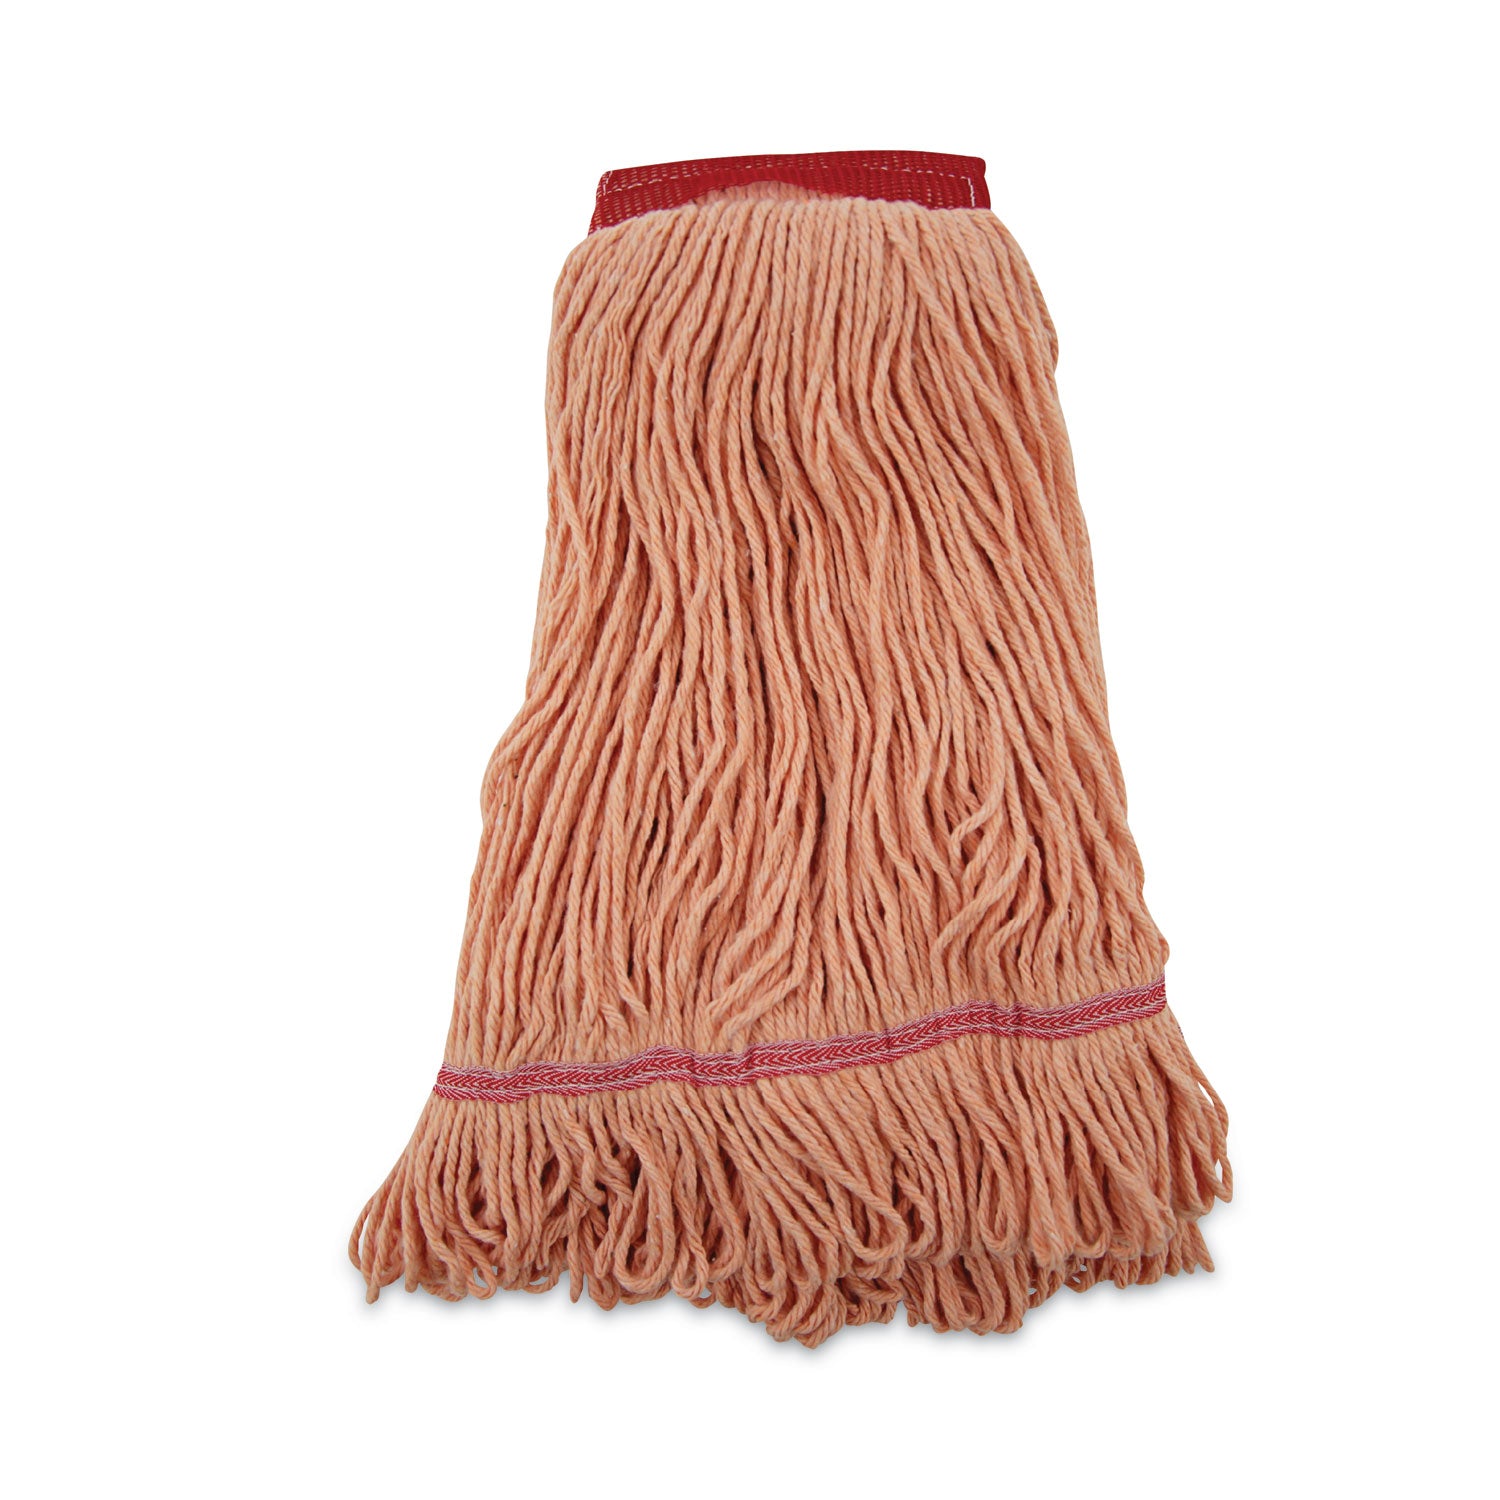 Super Loop Wet Mop Head, Cotton/Synthetic Fiber, 5" Headband, Large Size, Orange, 12/Carton - 